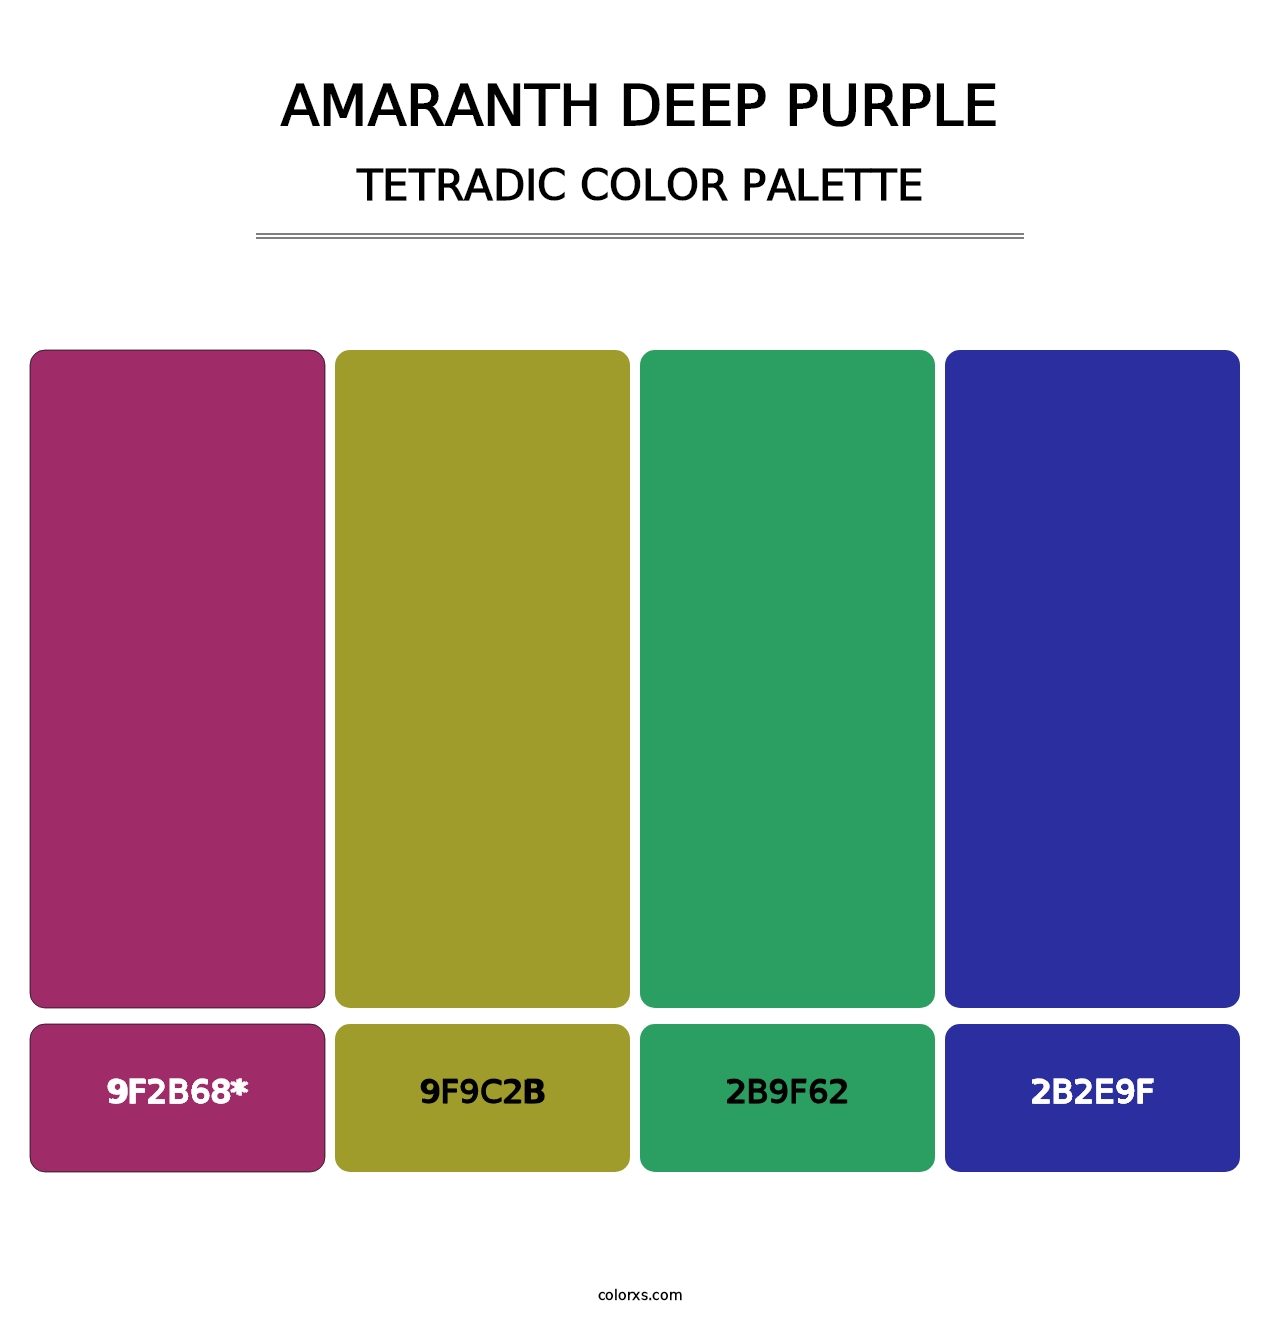 Amaranth Deep Purple - Tetradic Color Palette